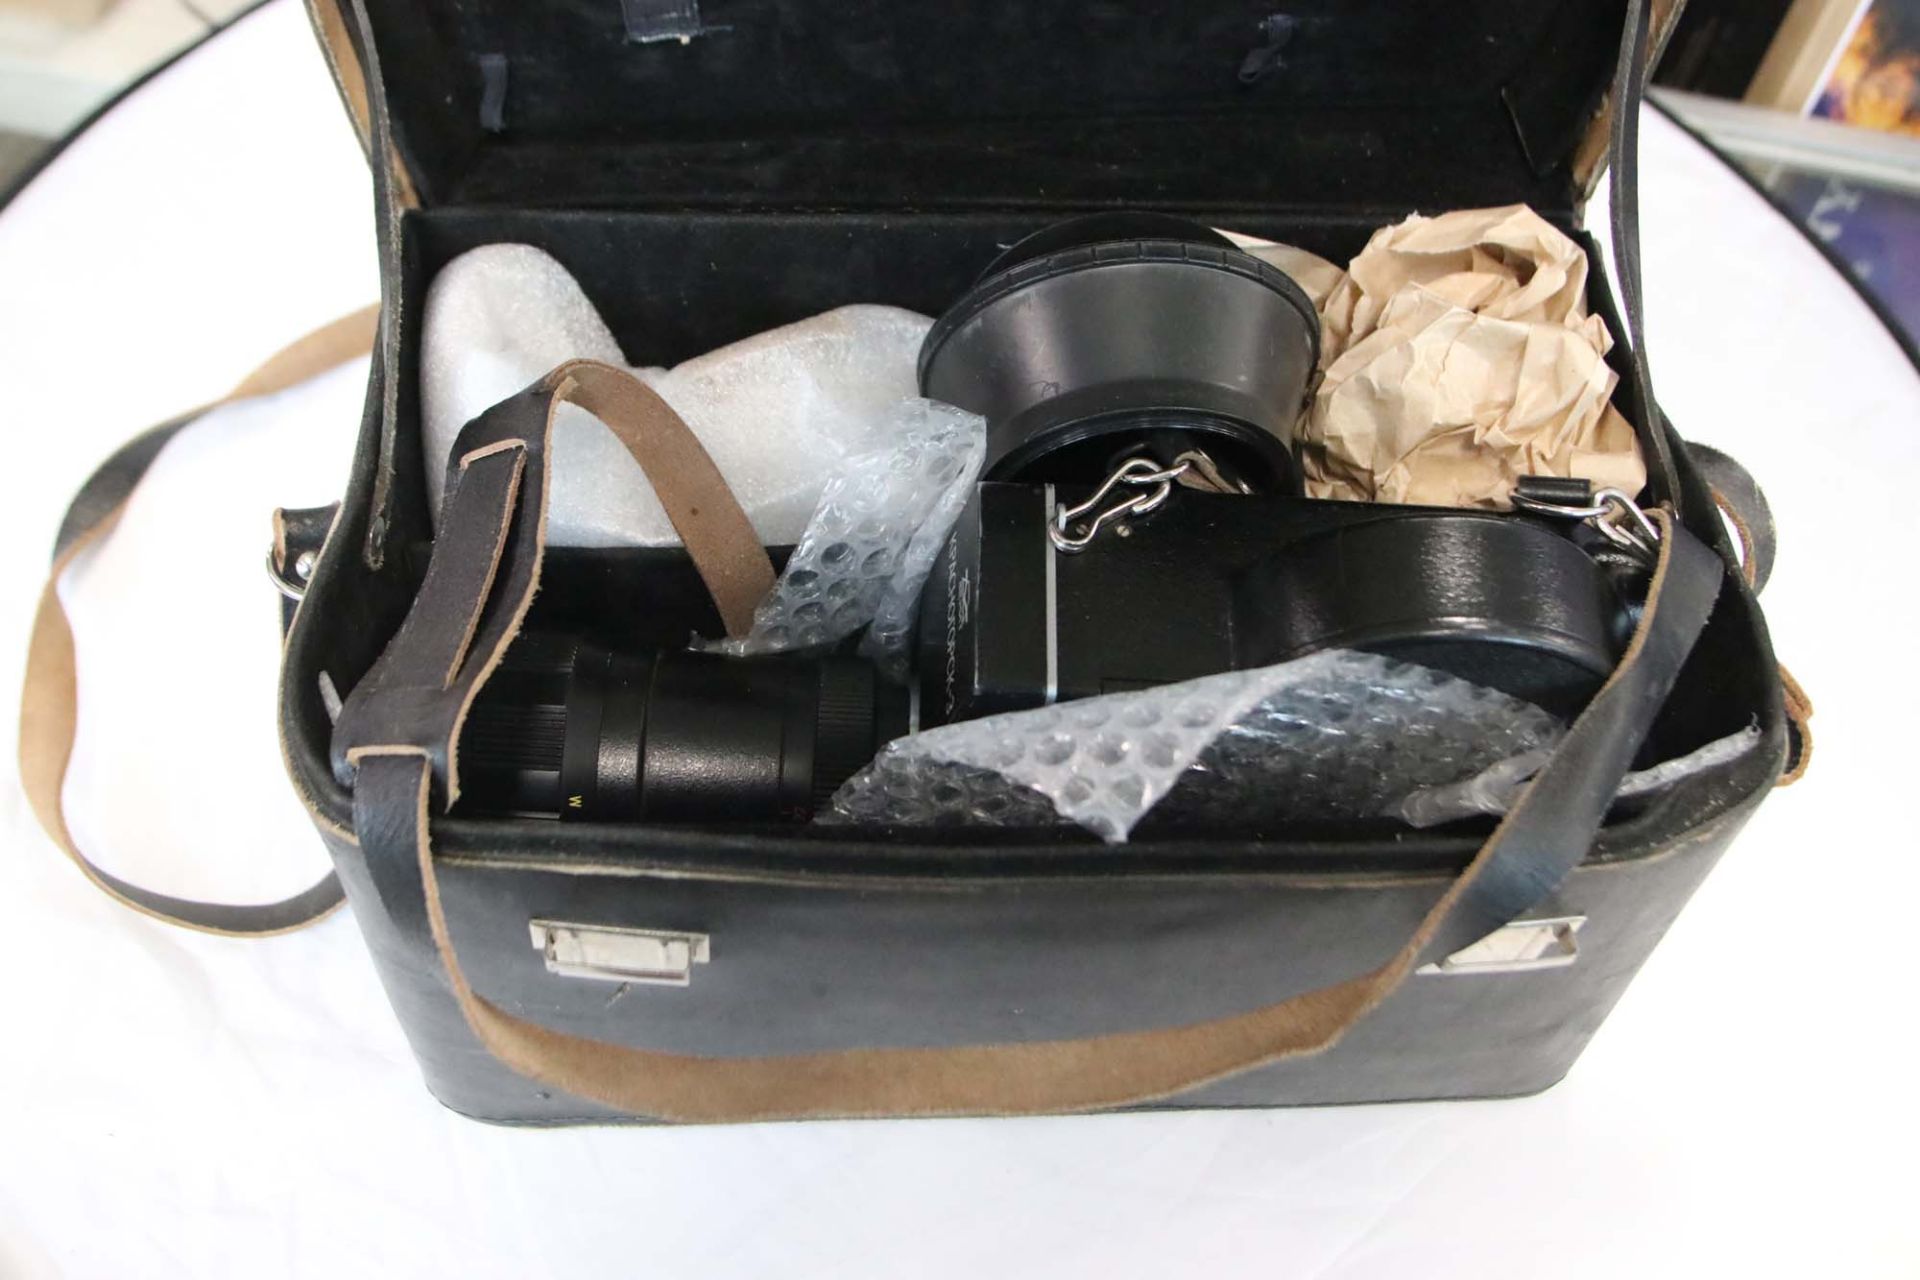 Vintage Kpachoropck-3 camera in carry case